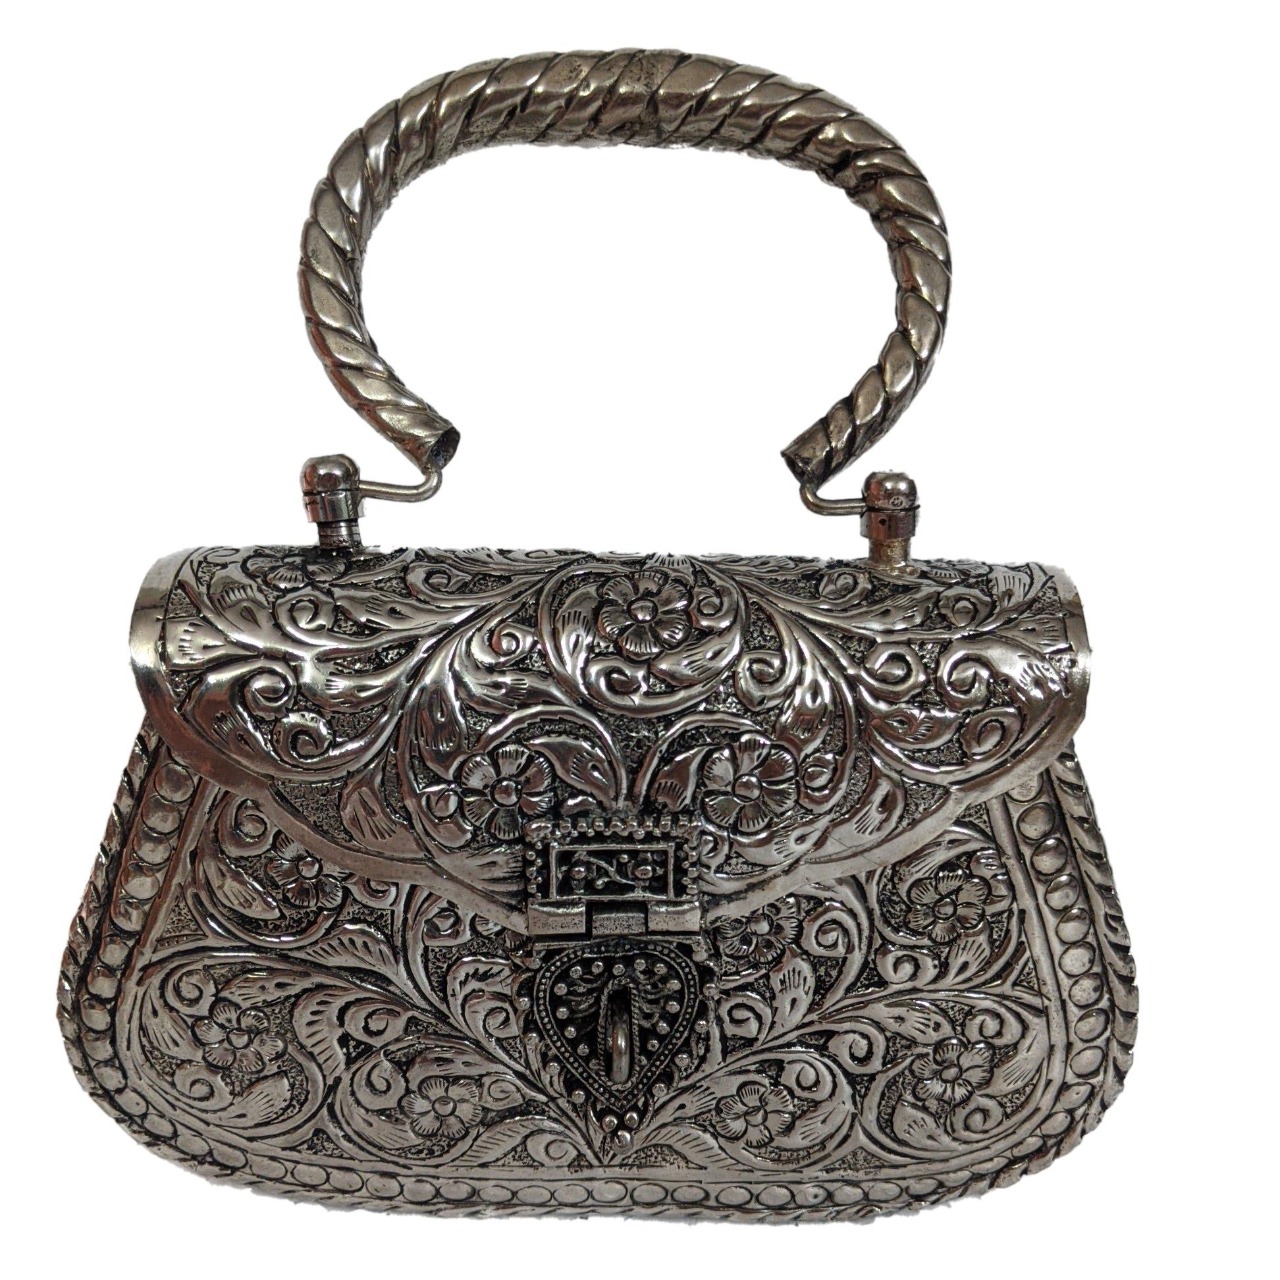 Ranga Clutch, Ornate brass bag, Metal Purse, Antique Bag, Gold Purse, Boho,  Gypsy, Cigarette Case